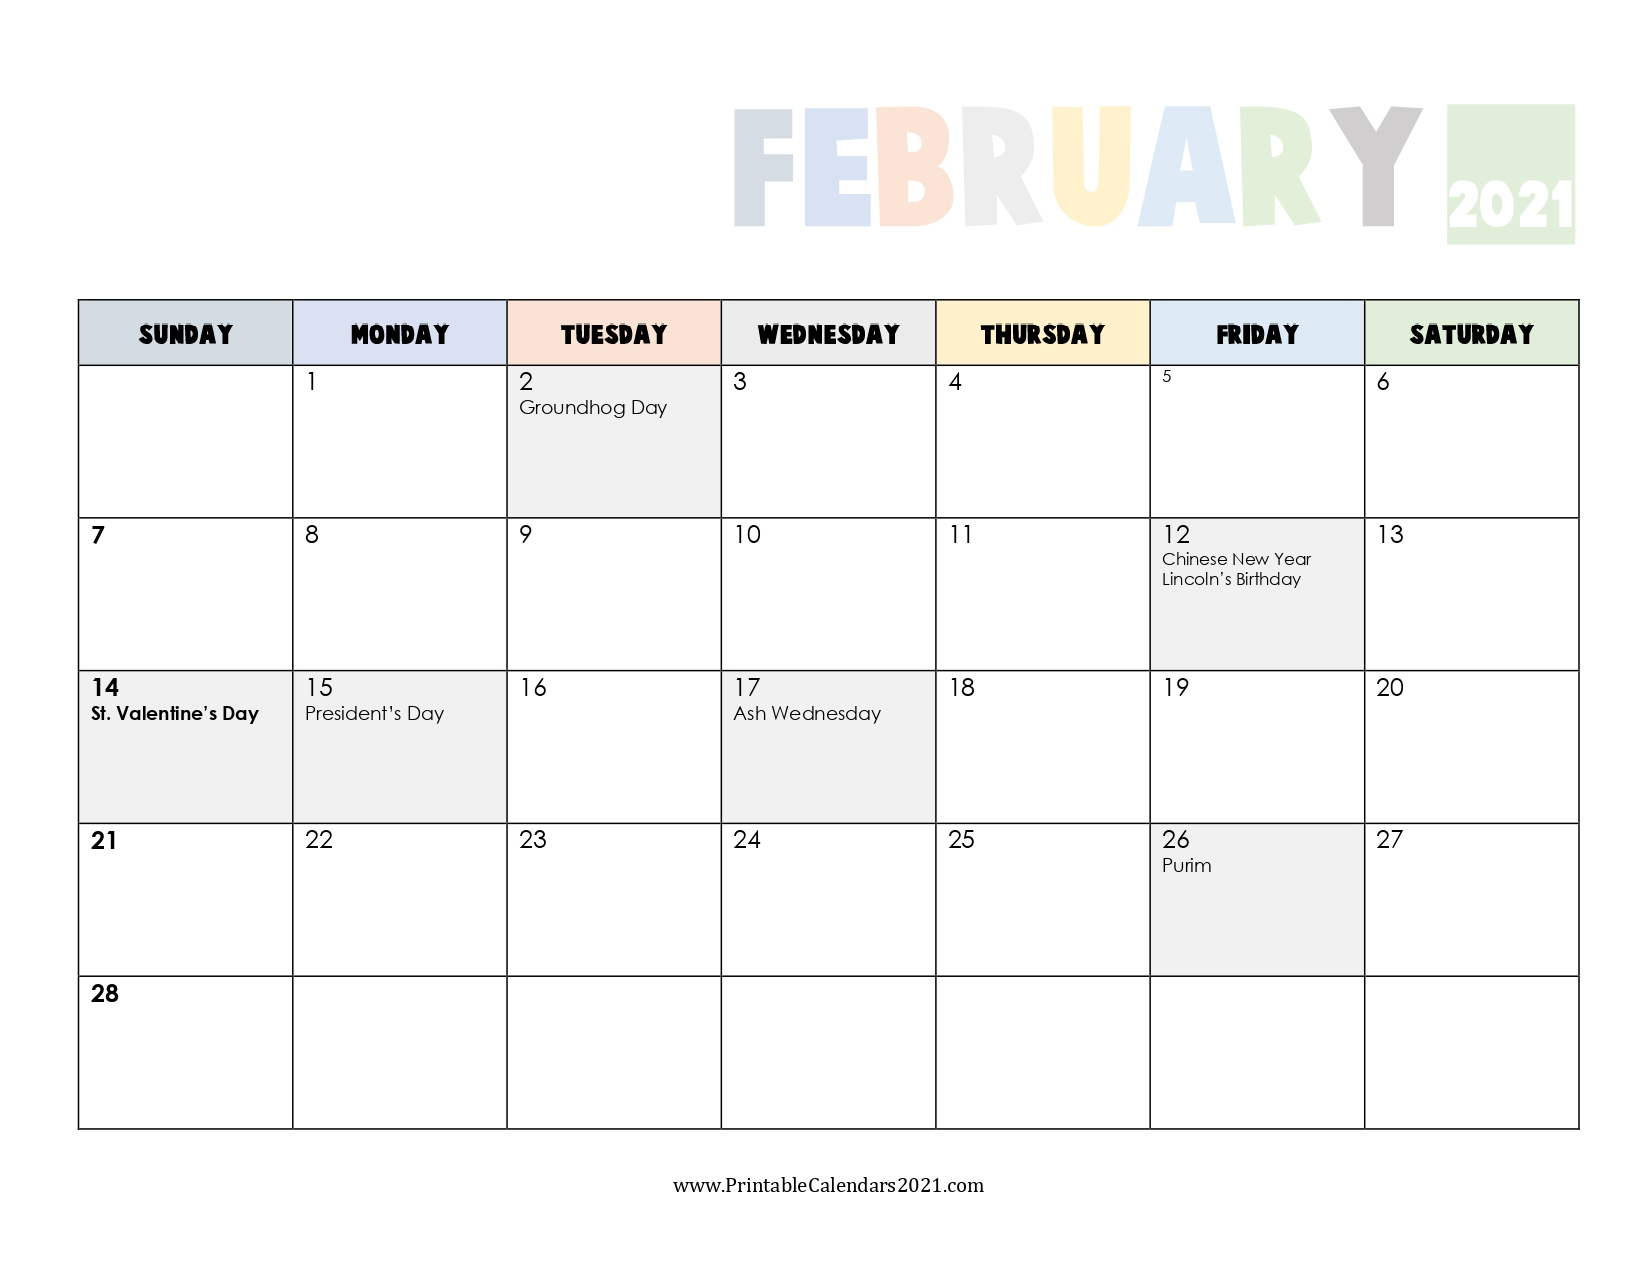 65+ Free February 2021 Calendar Printable With Holidays